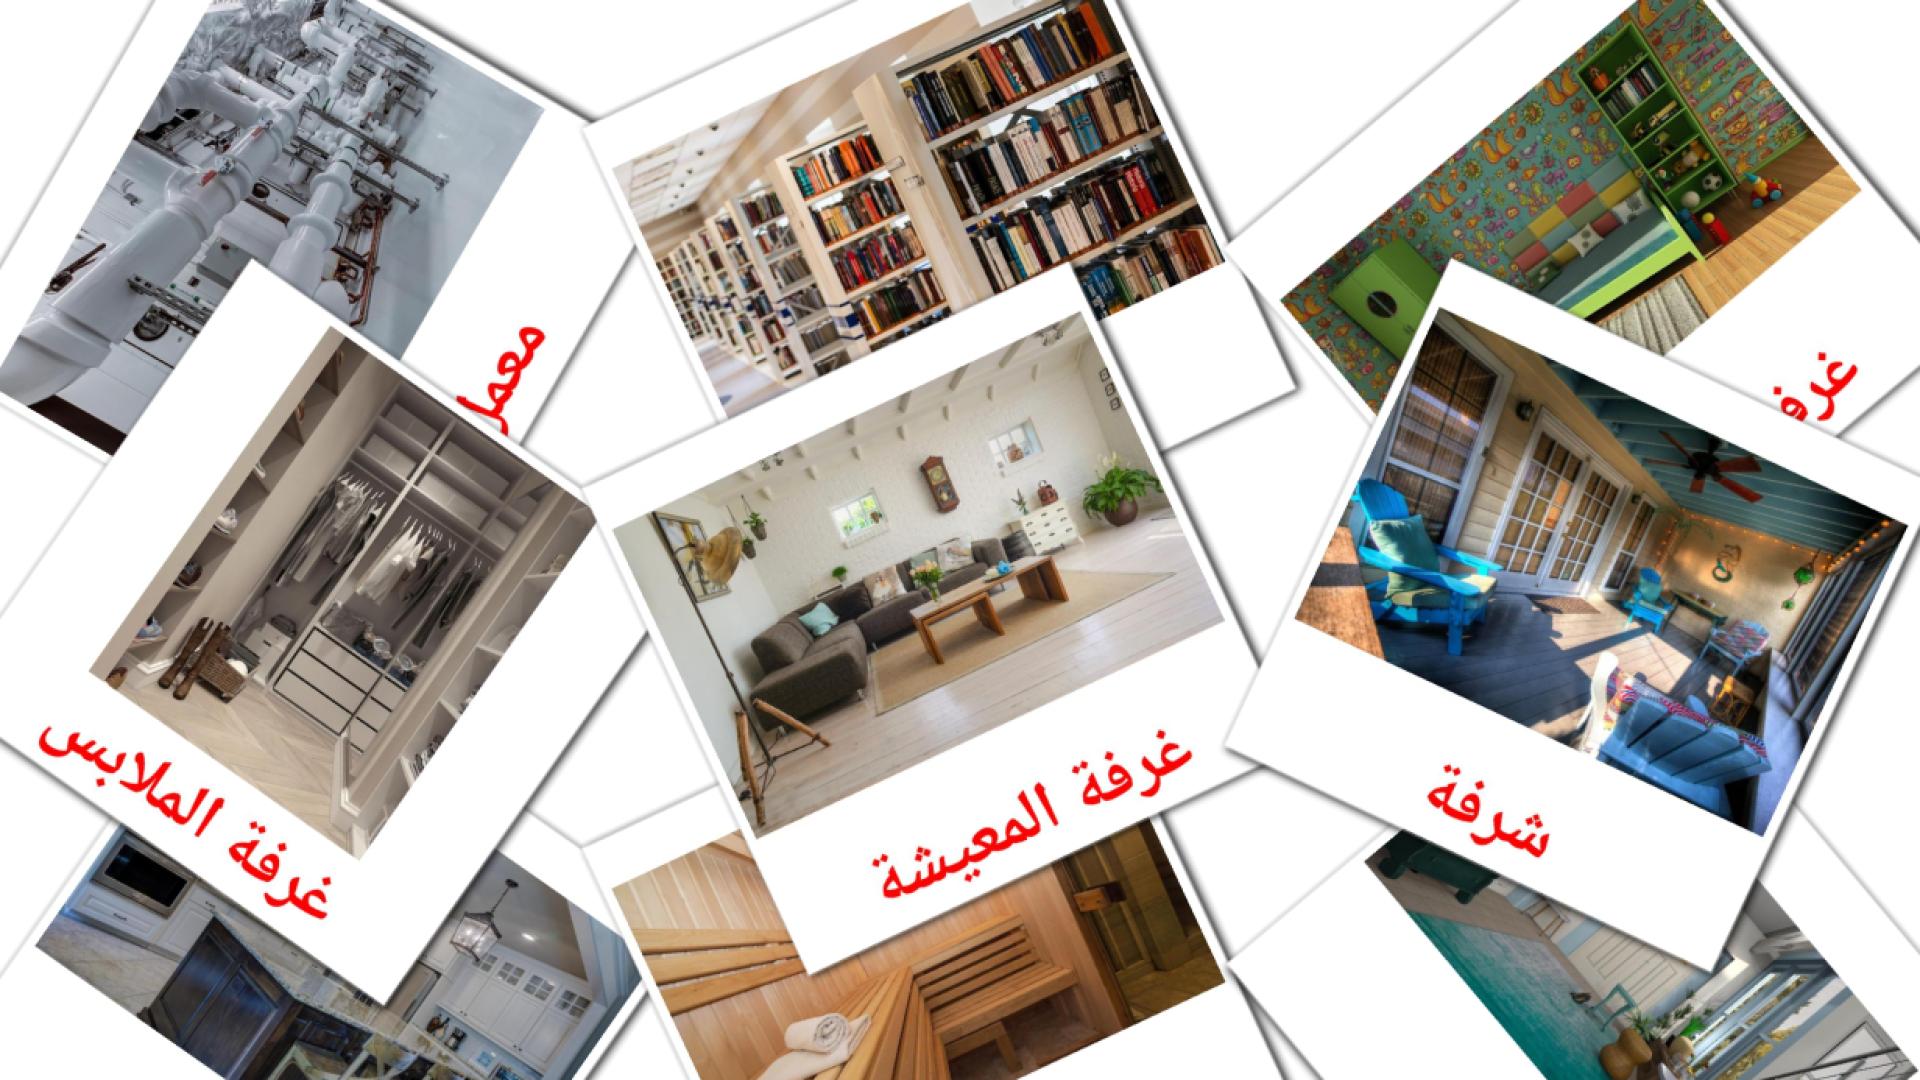 Kamers - arabisch vocabulary cards